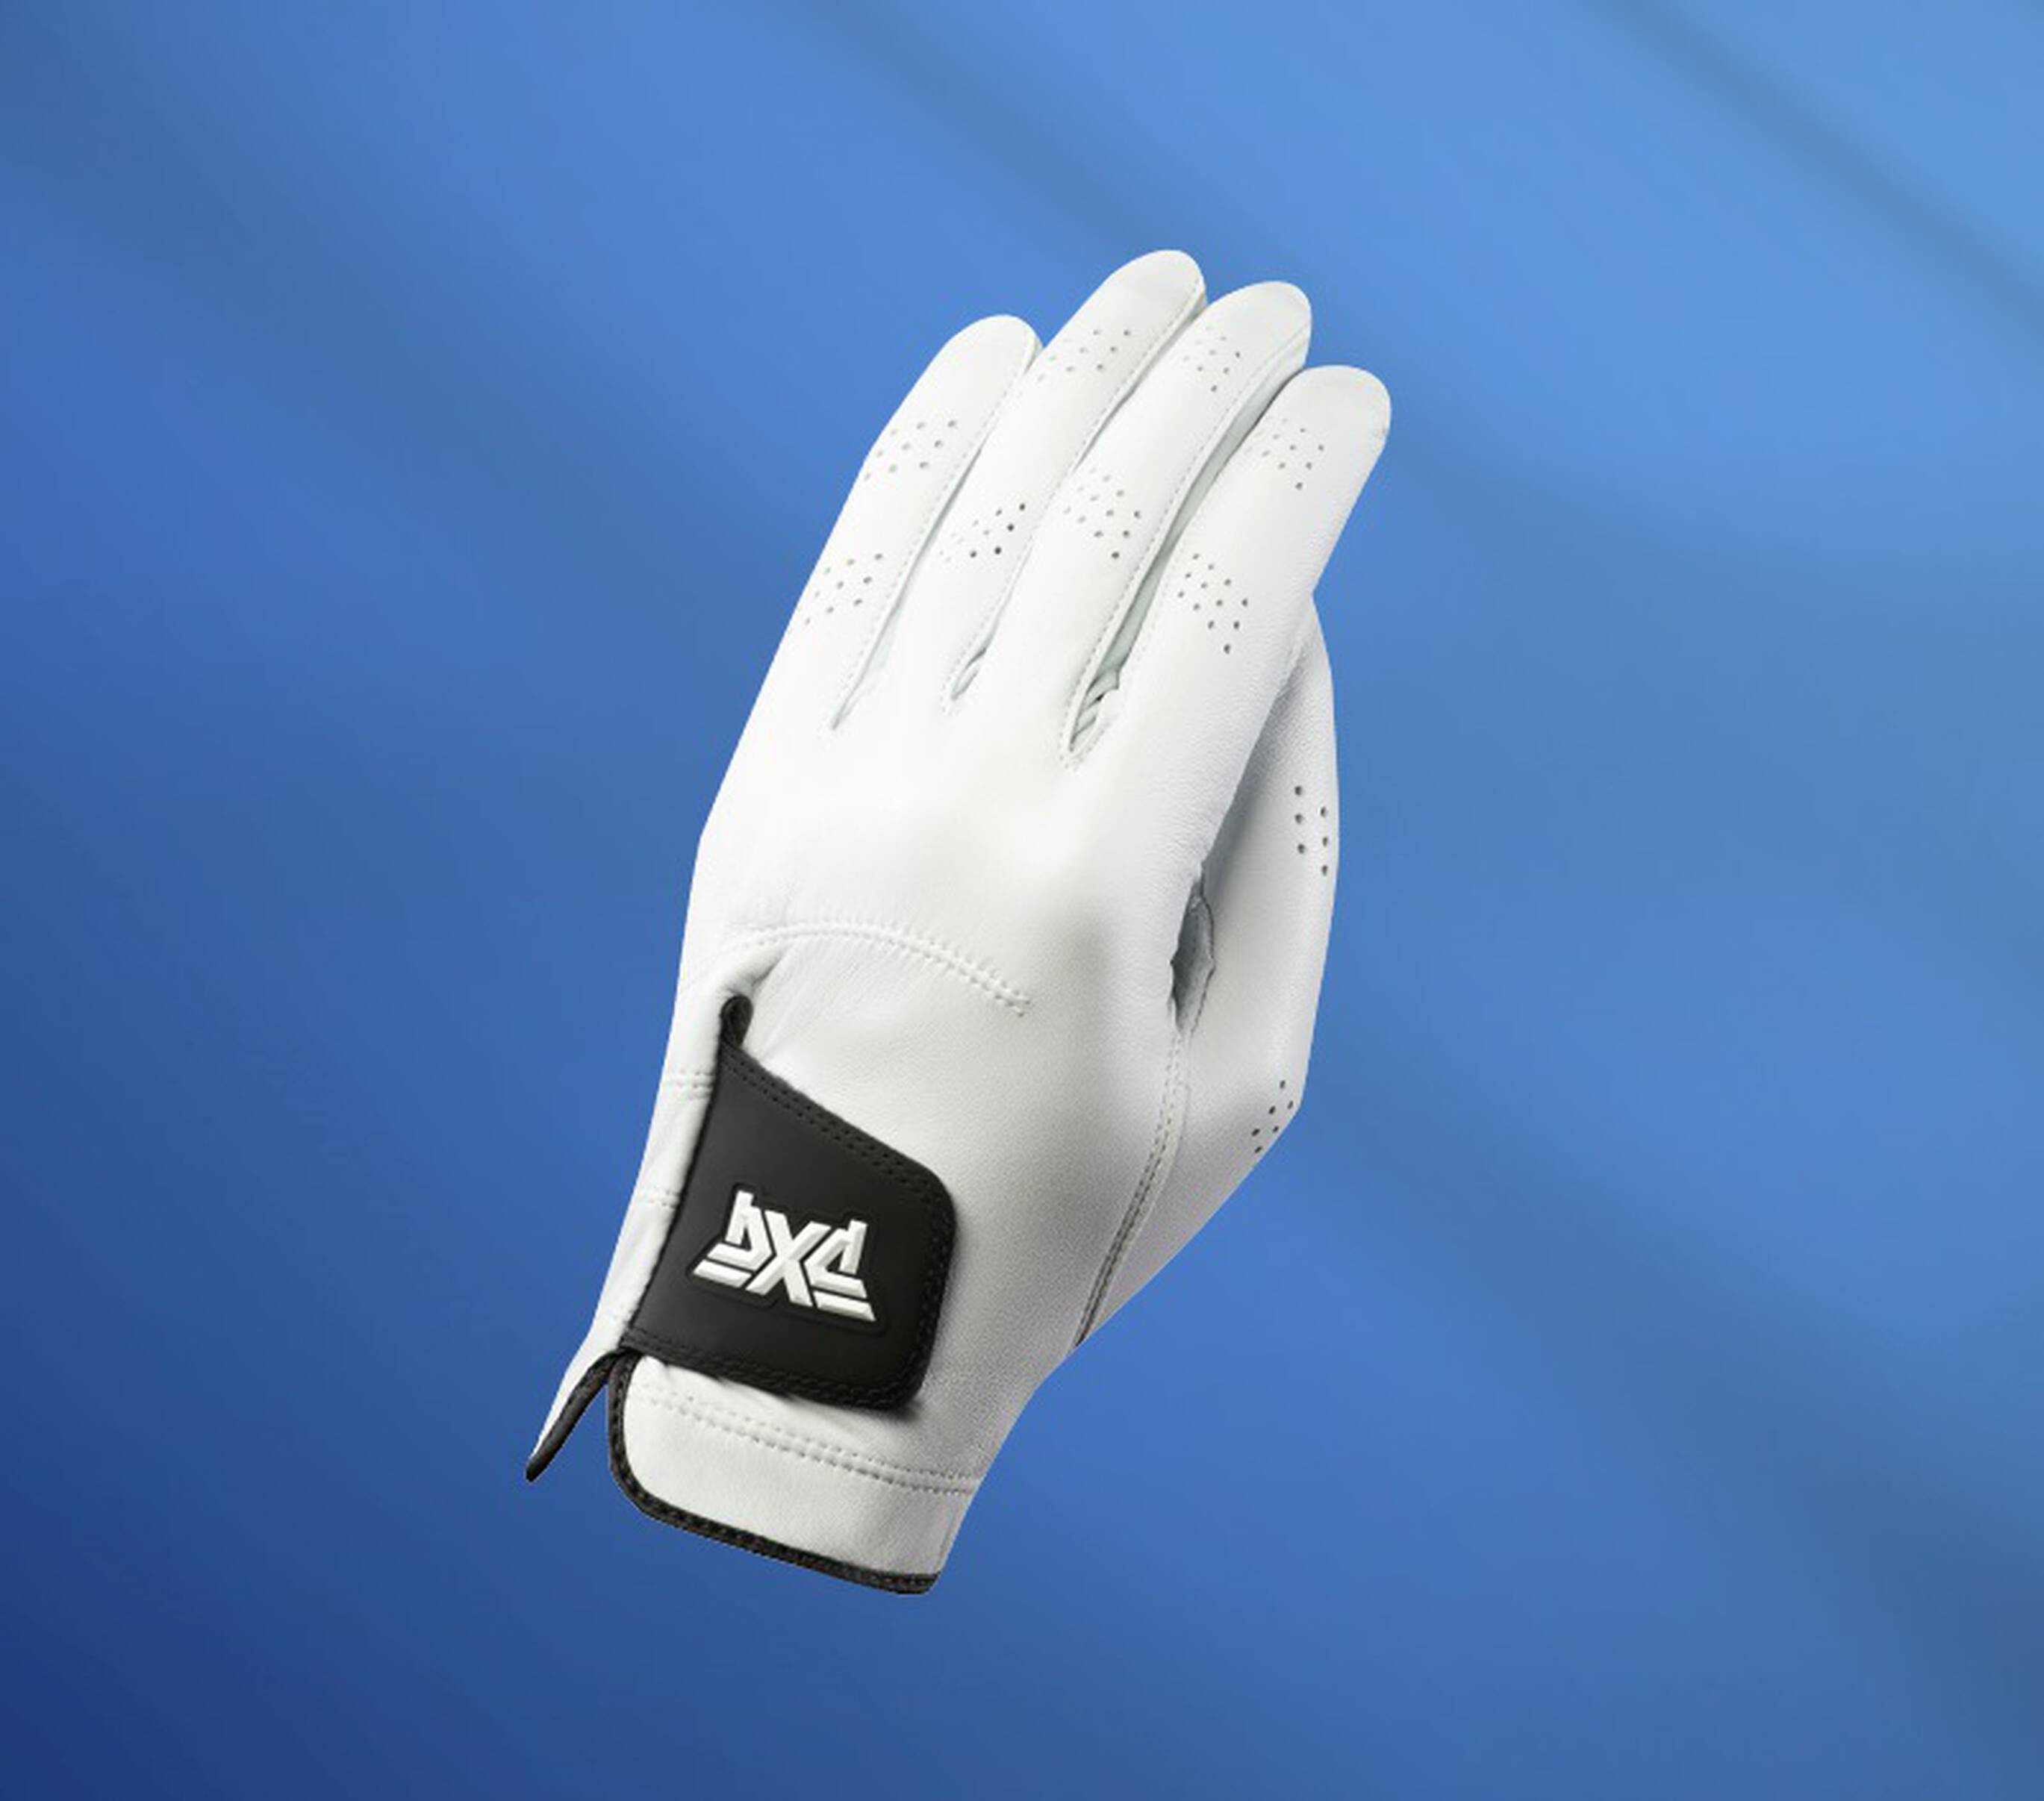 PXG Golf Glove